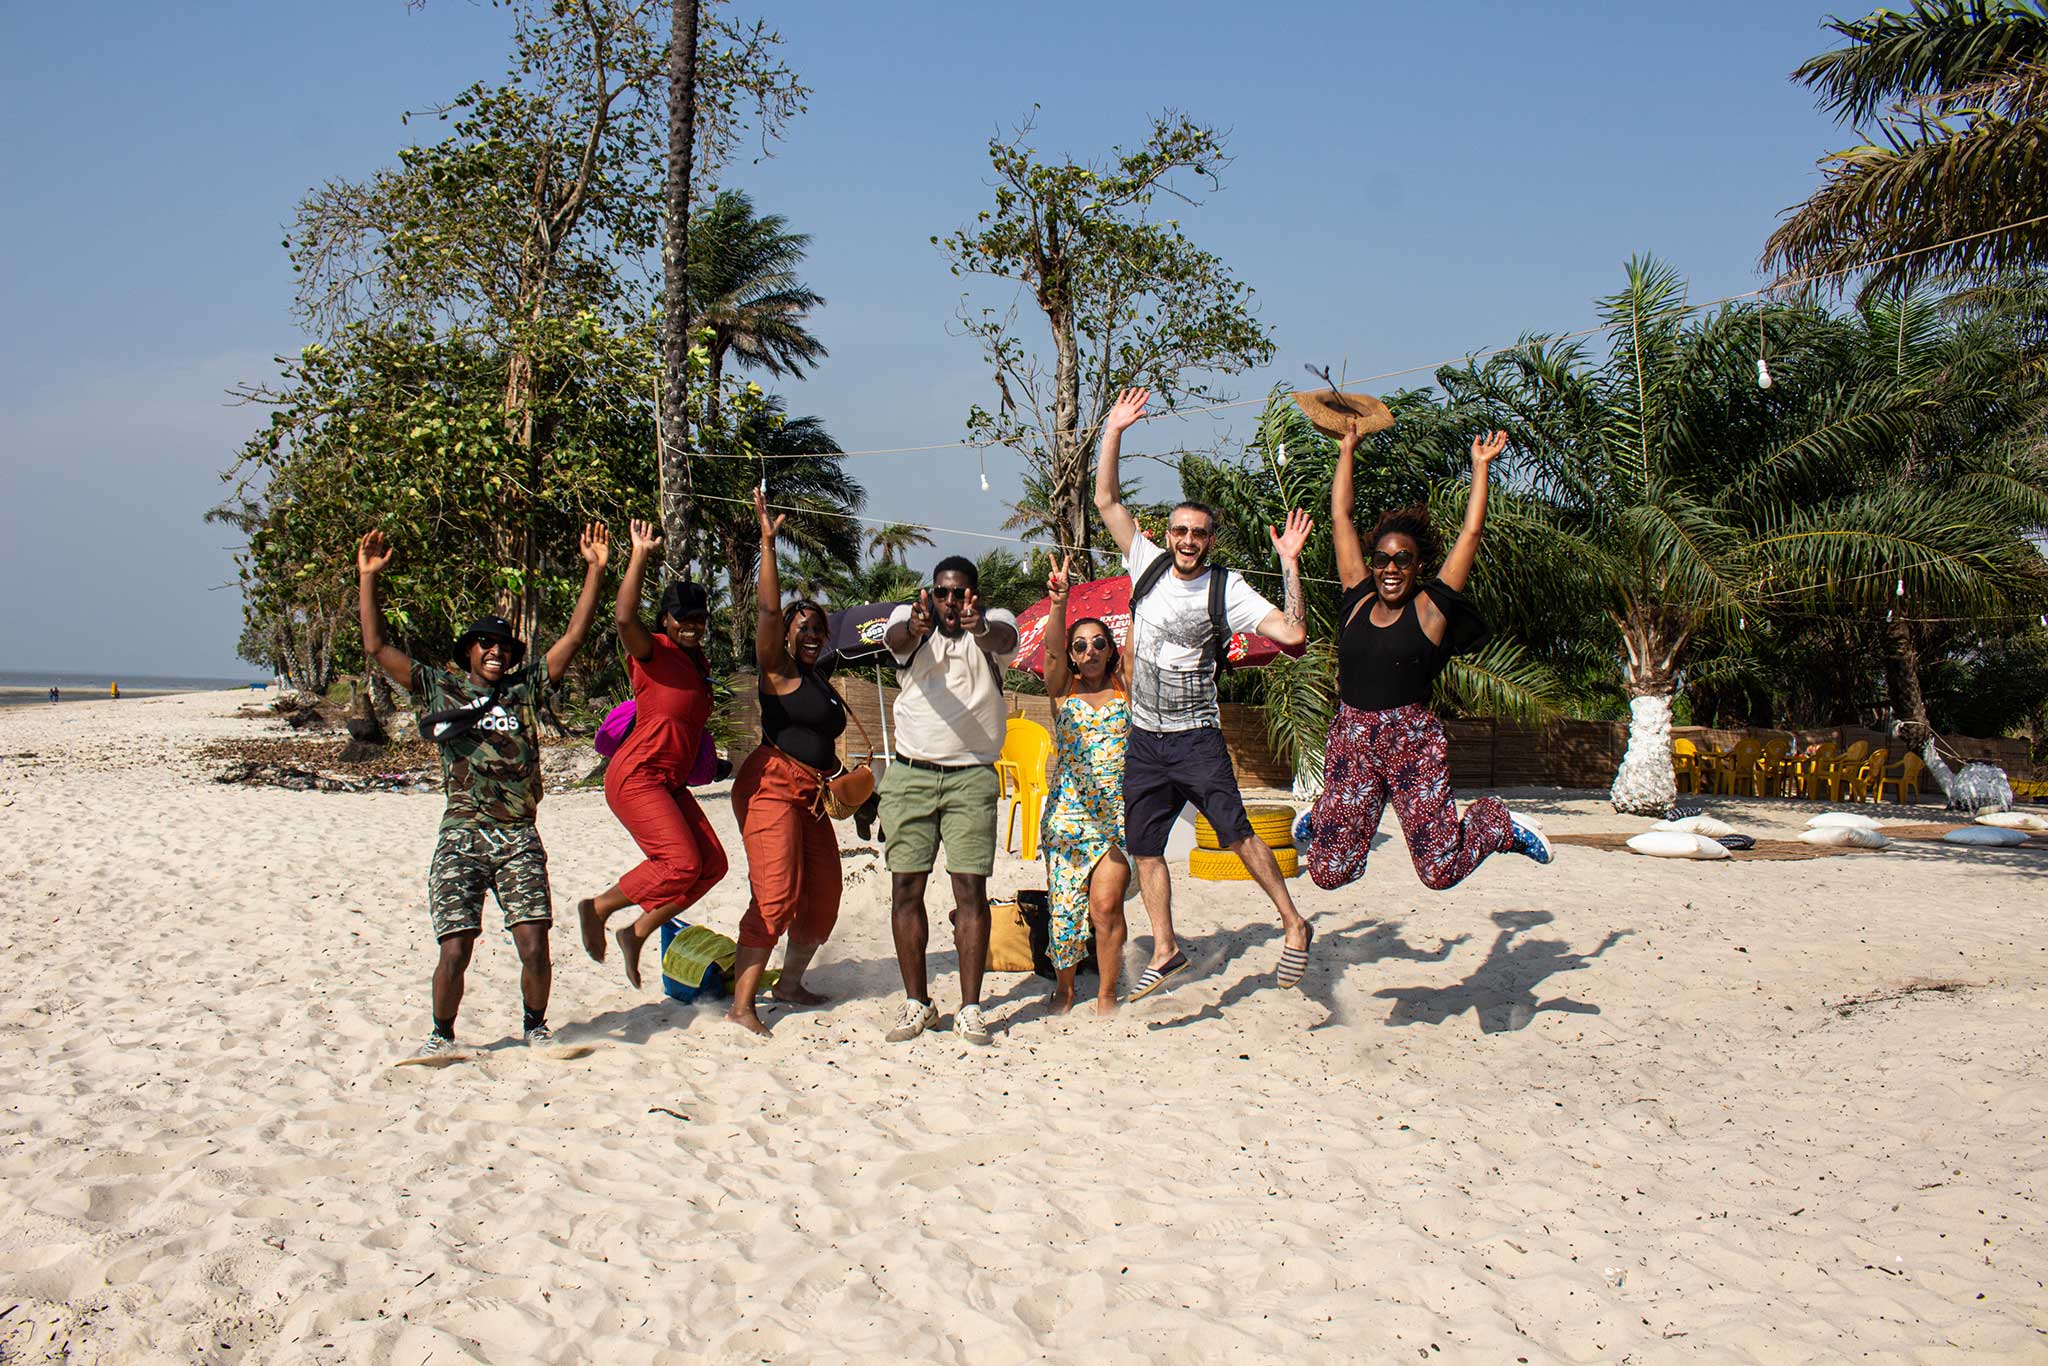 tayaki-plage-excursion-people-conakry-kobaya-miranasstourisme